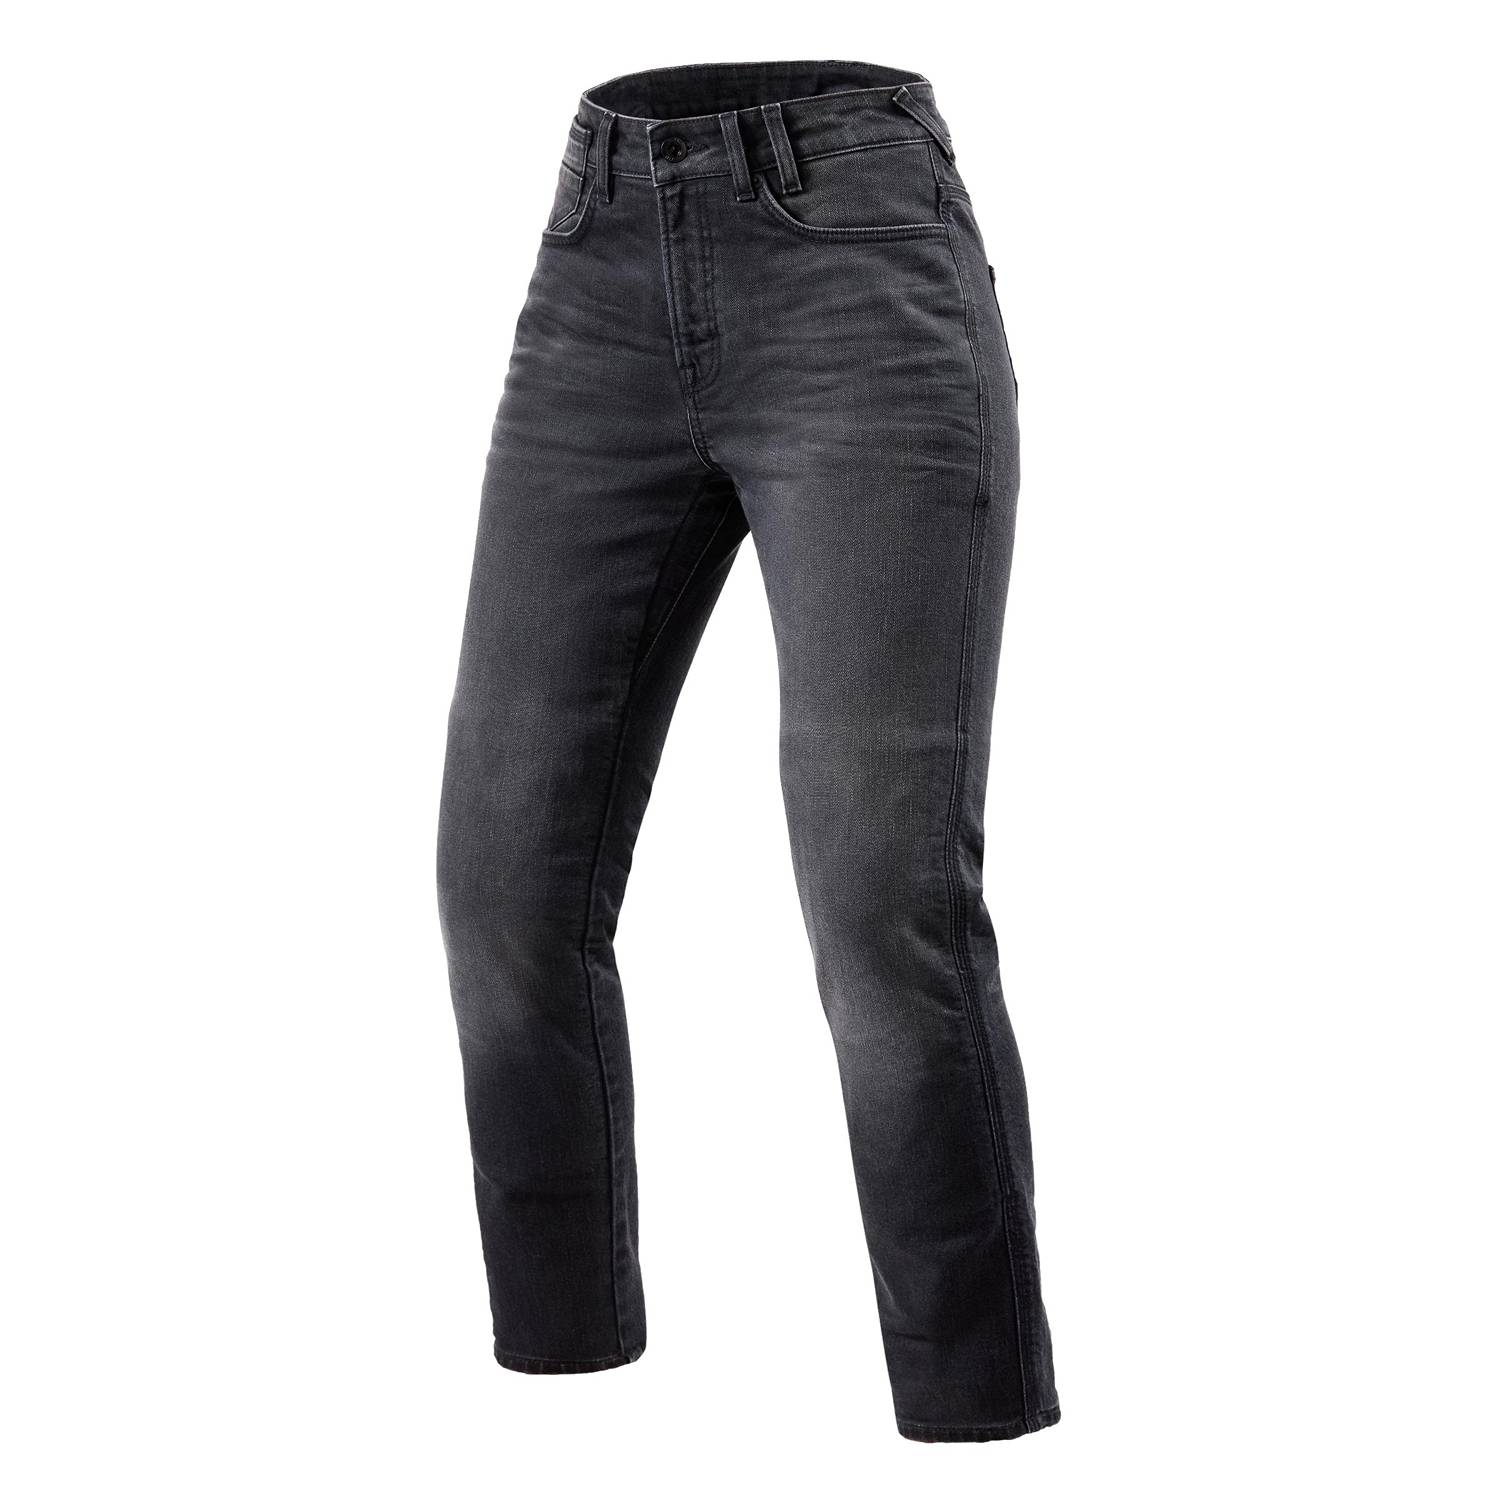 Image of REV'IT! Jeans Victoria 2 Ladies SF Mid Grey Used Motorcycle Jeans Size L30/W30 EN